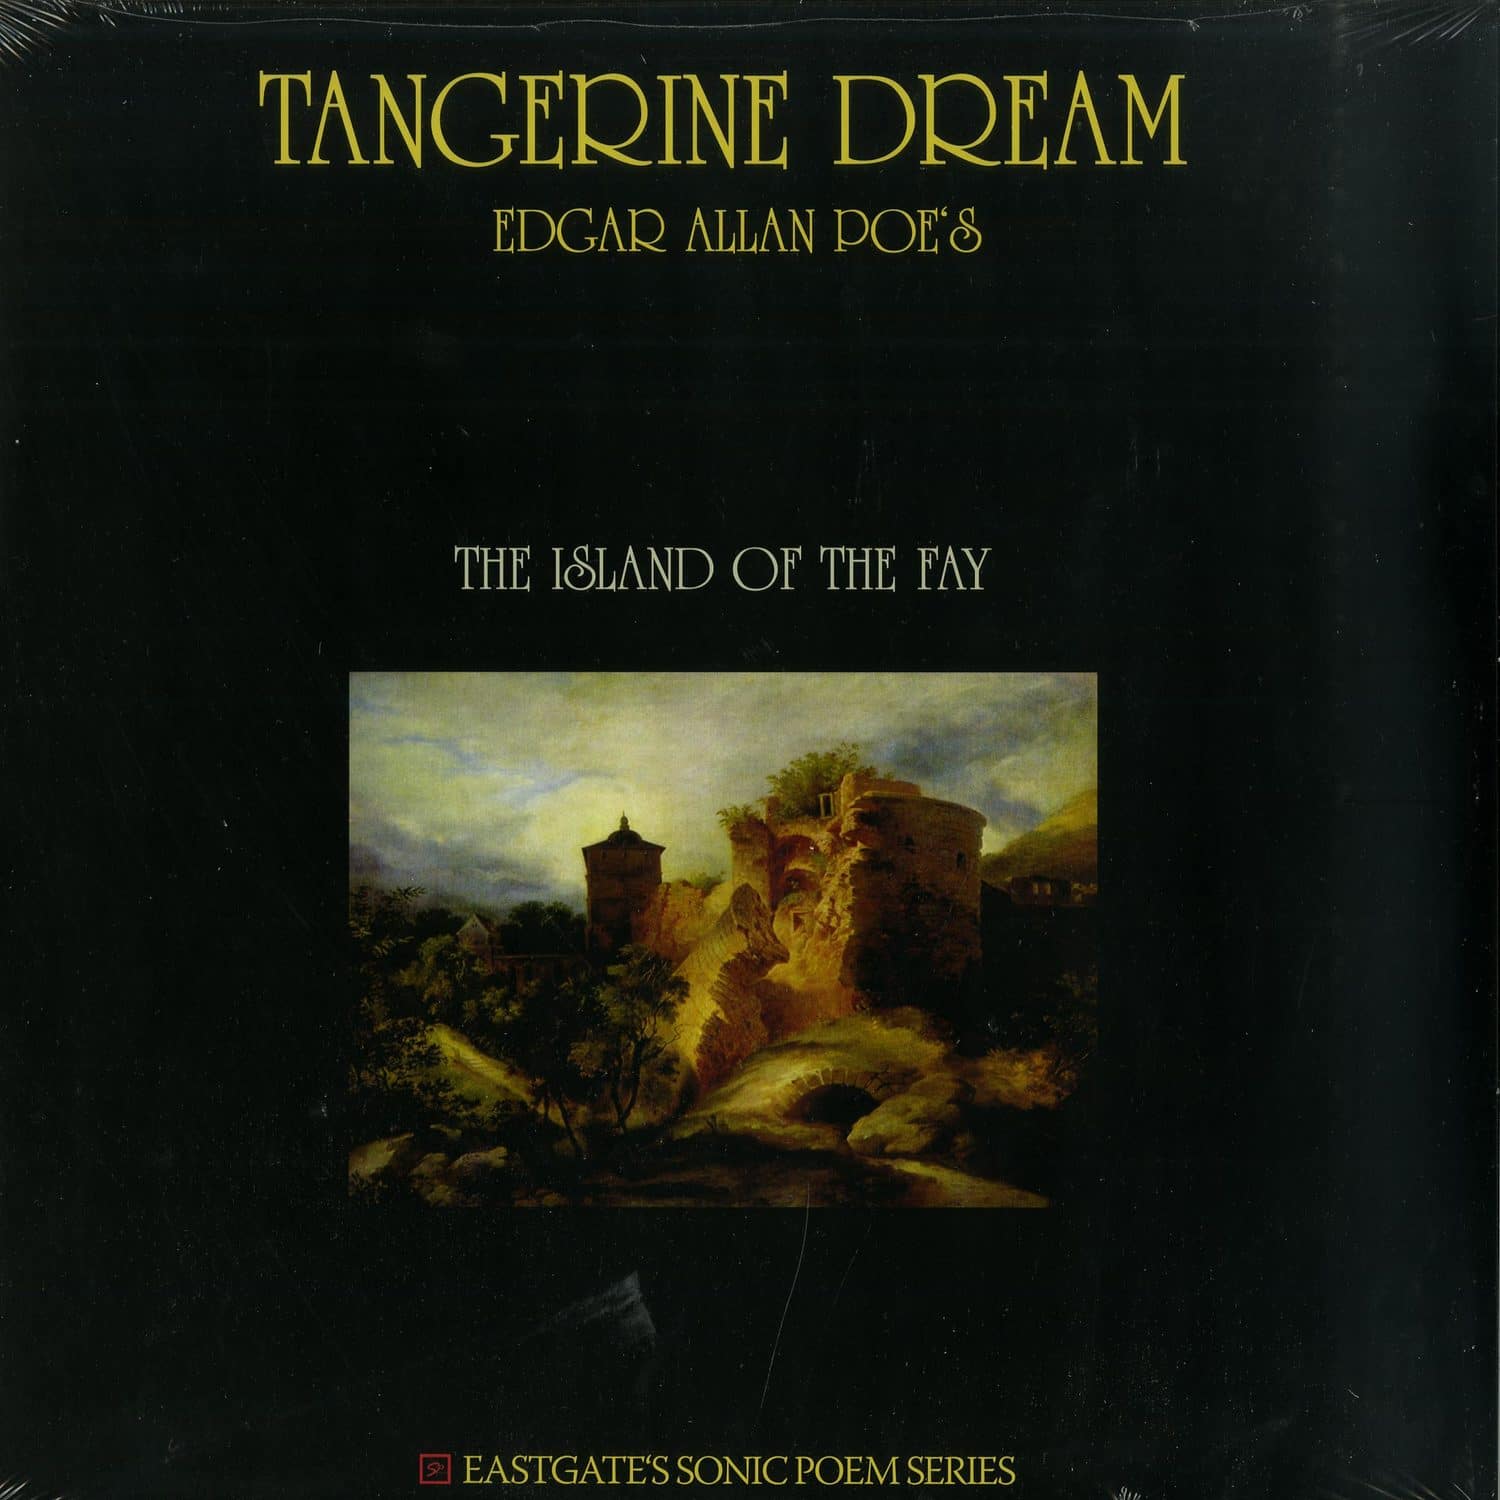 Tangerine Dream - EDGAR ALLAN POES THE ISLAND OF THE FAY